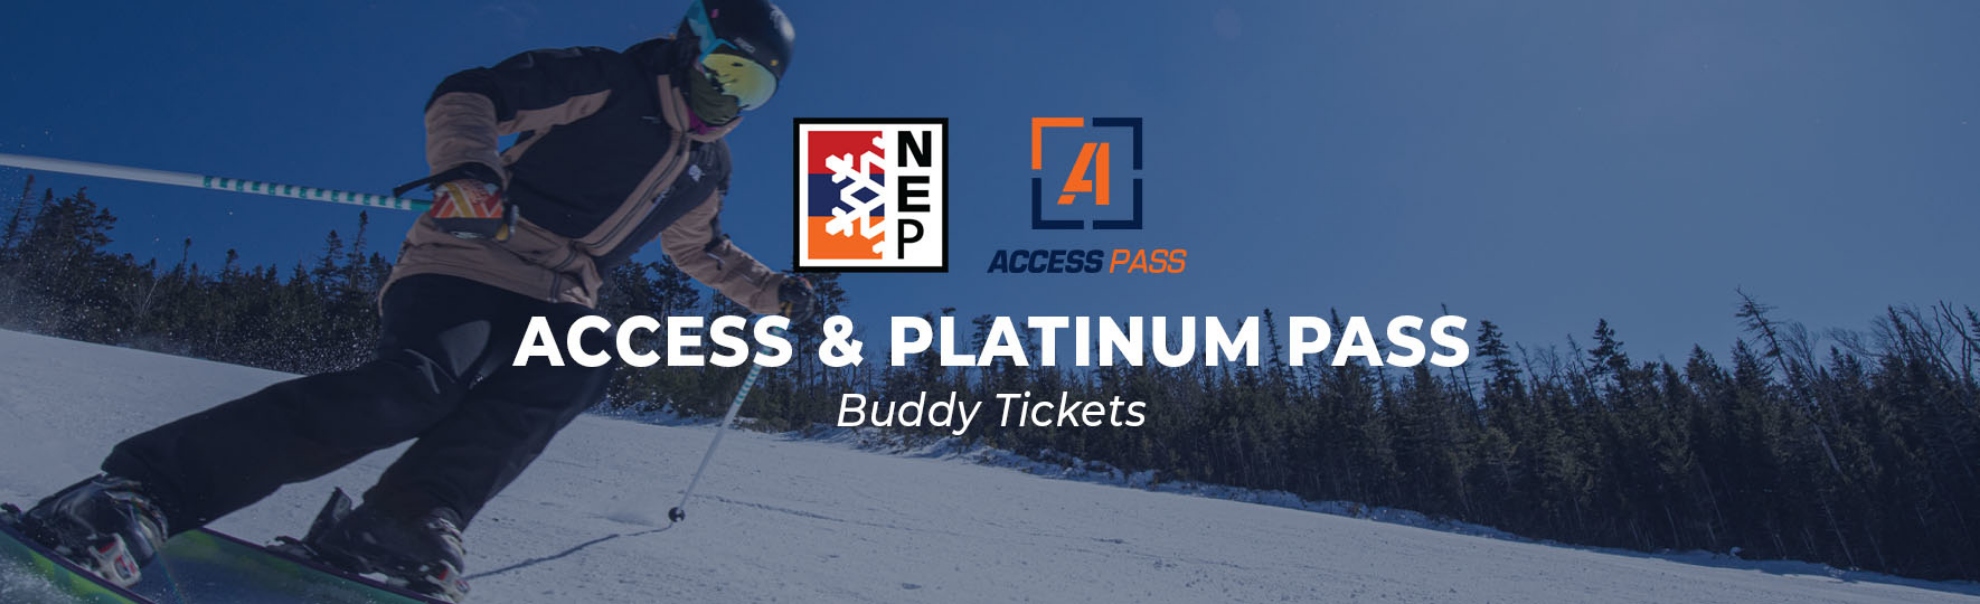 Access and Platinum Pass Holder Buddy Tickets